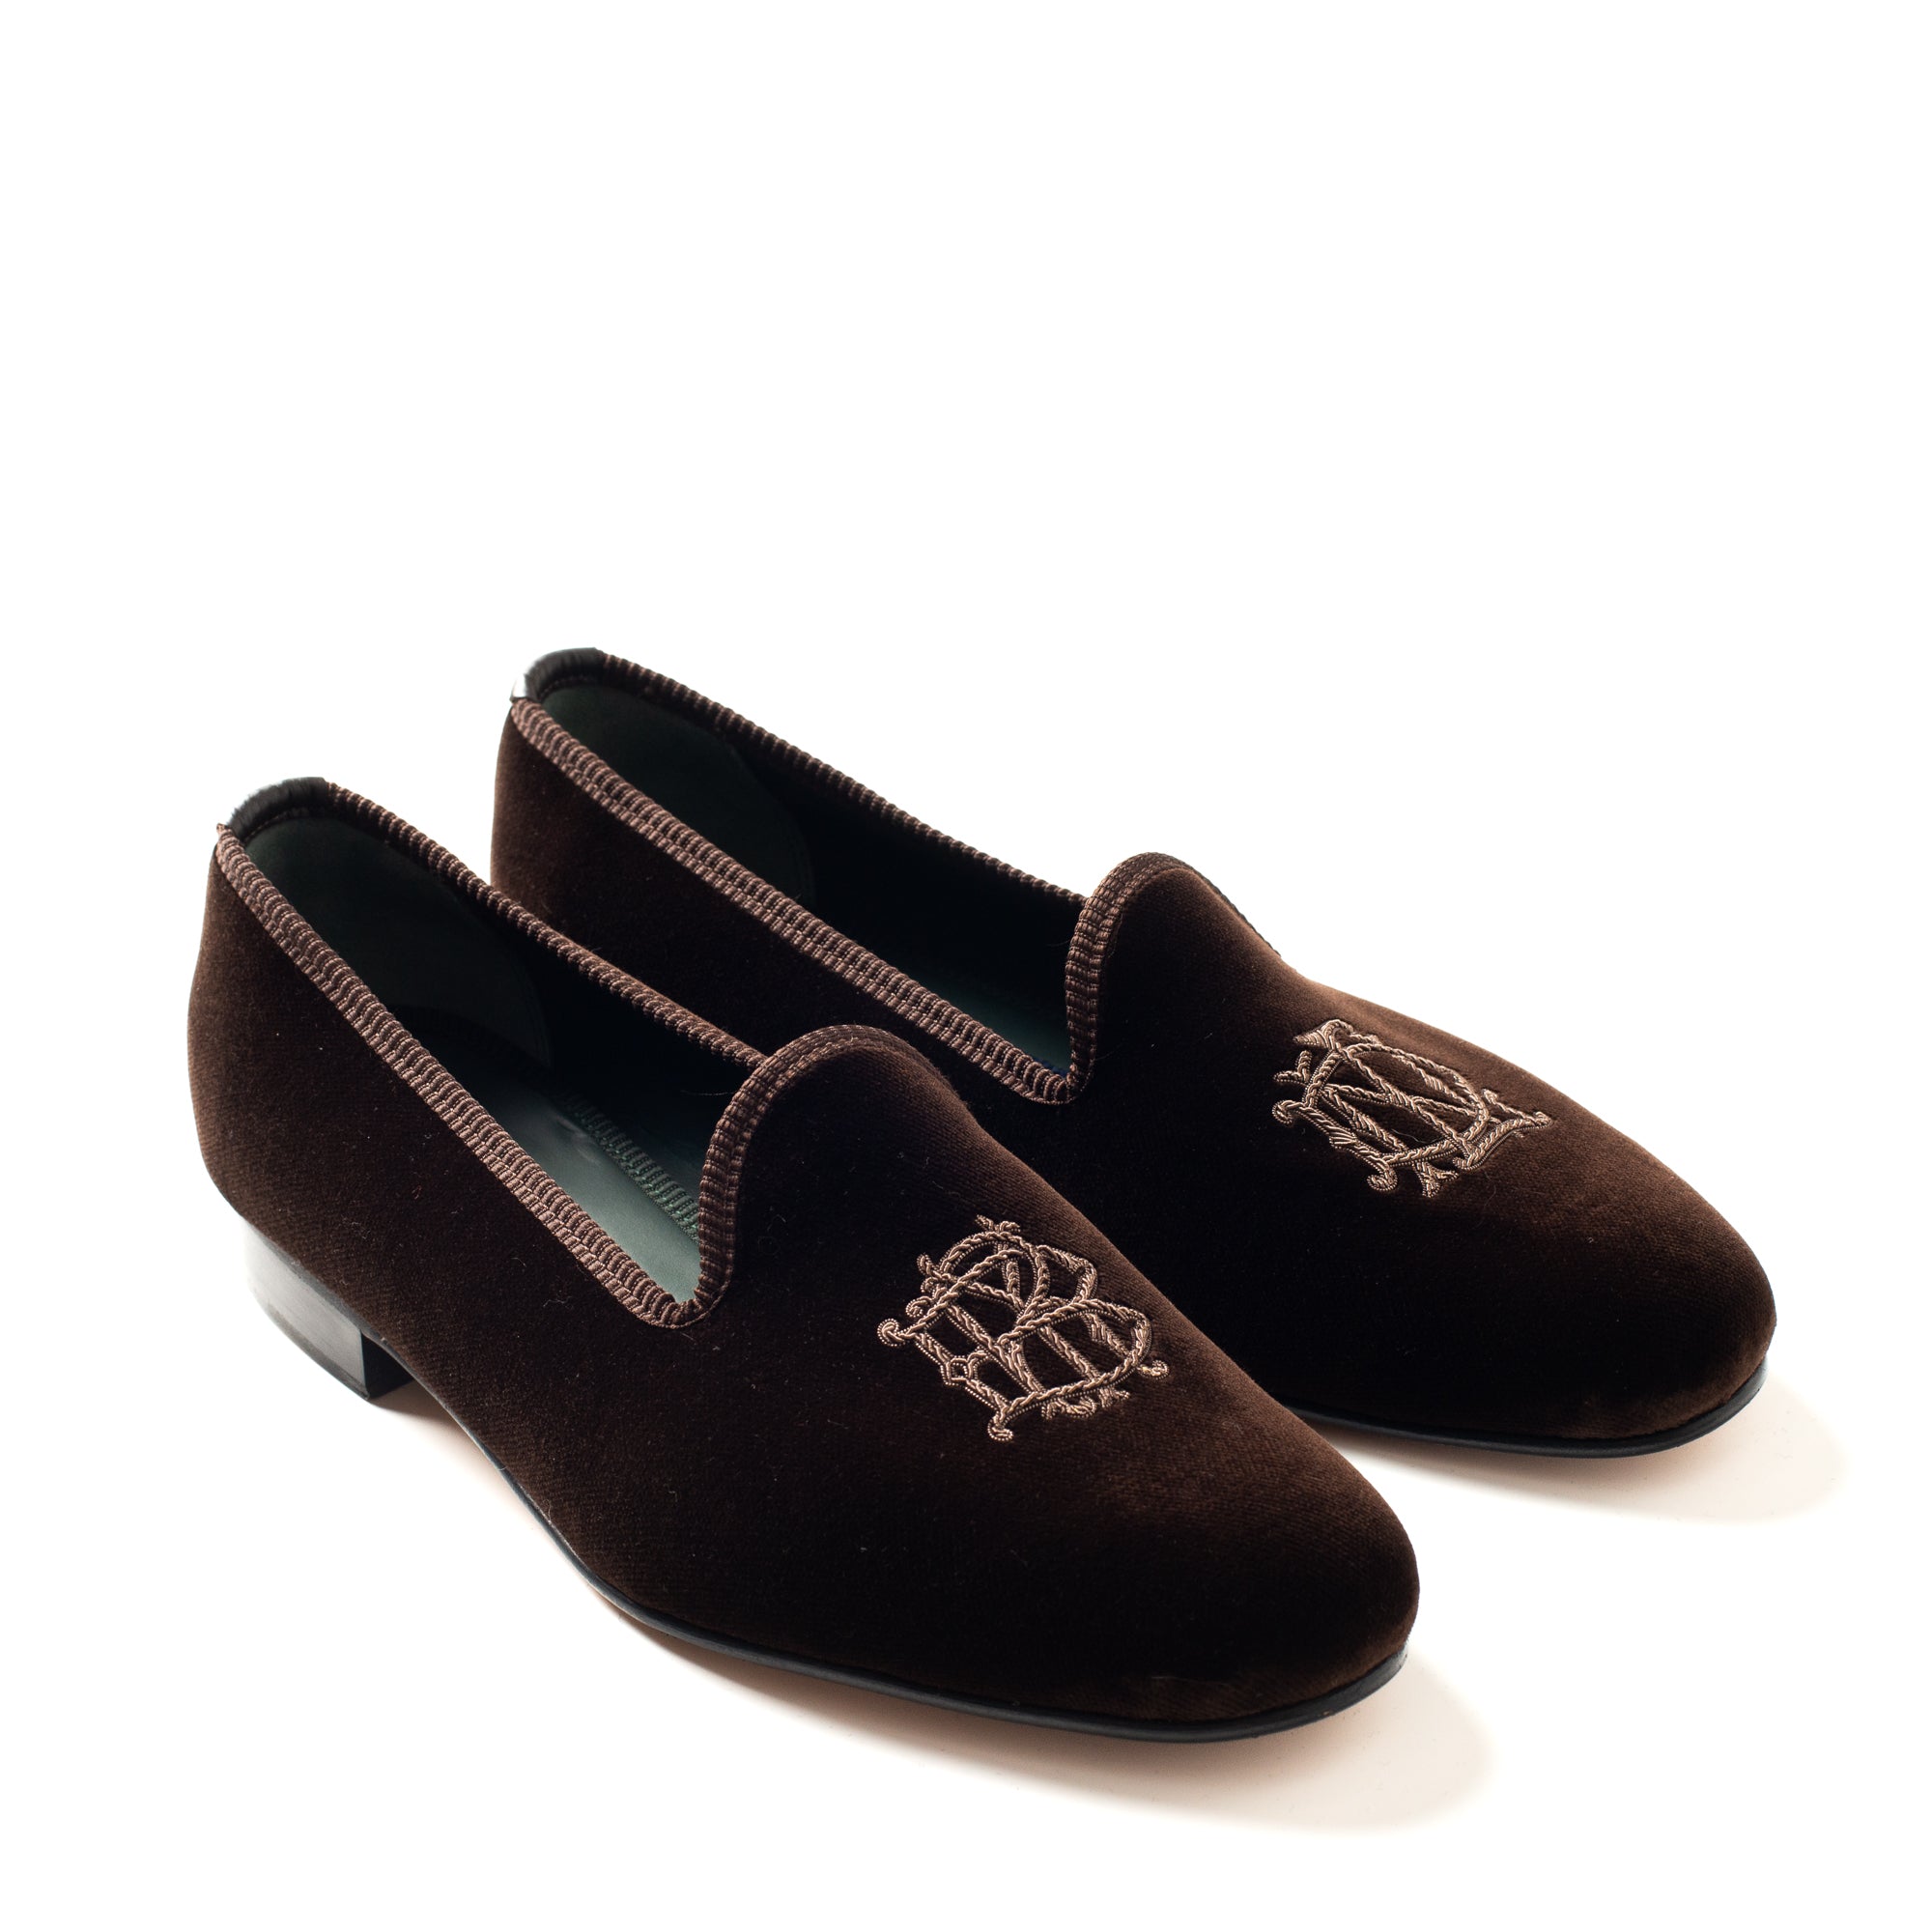 Artemis Design Co. | Men's Velvet Loafers, Black Tie